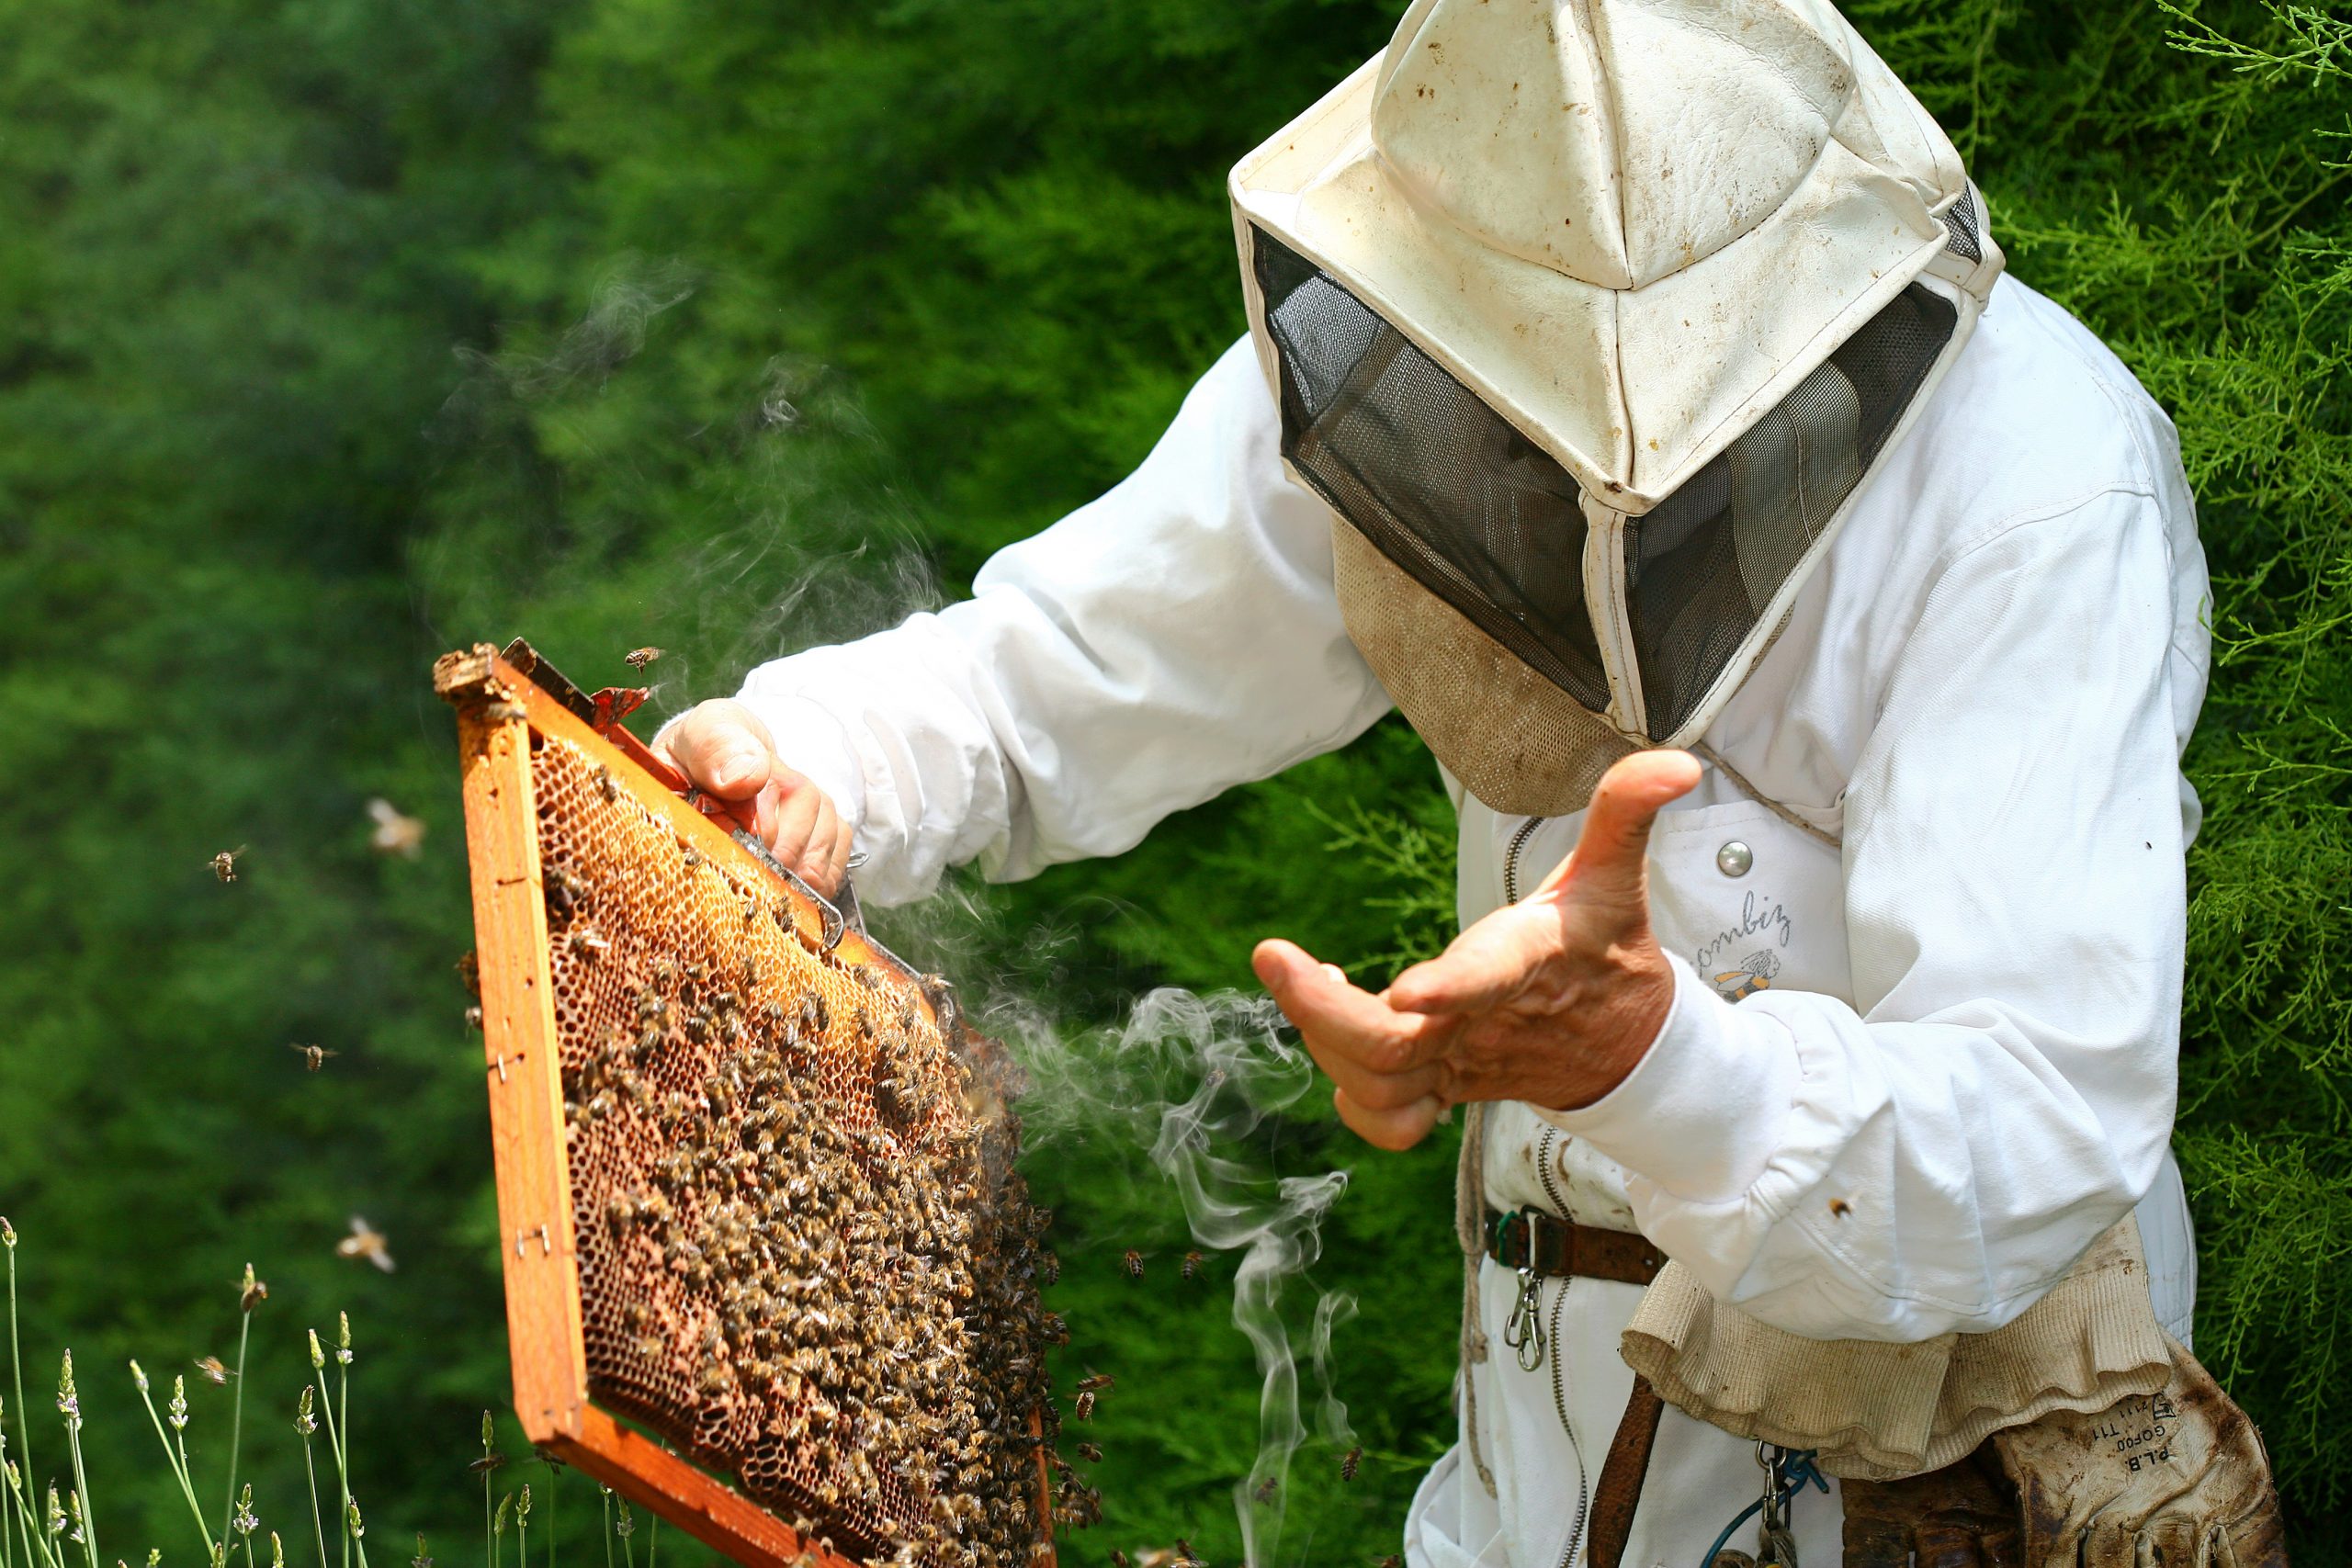 Volunteer Group Catches Swarms, Re-Homes Honeybees